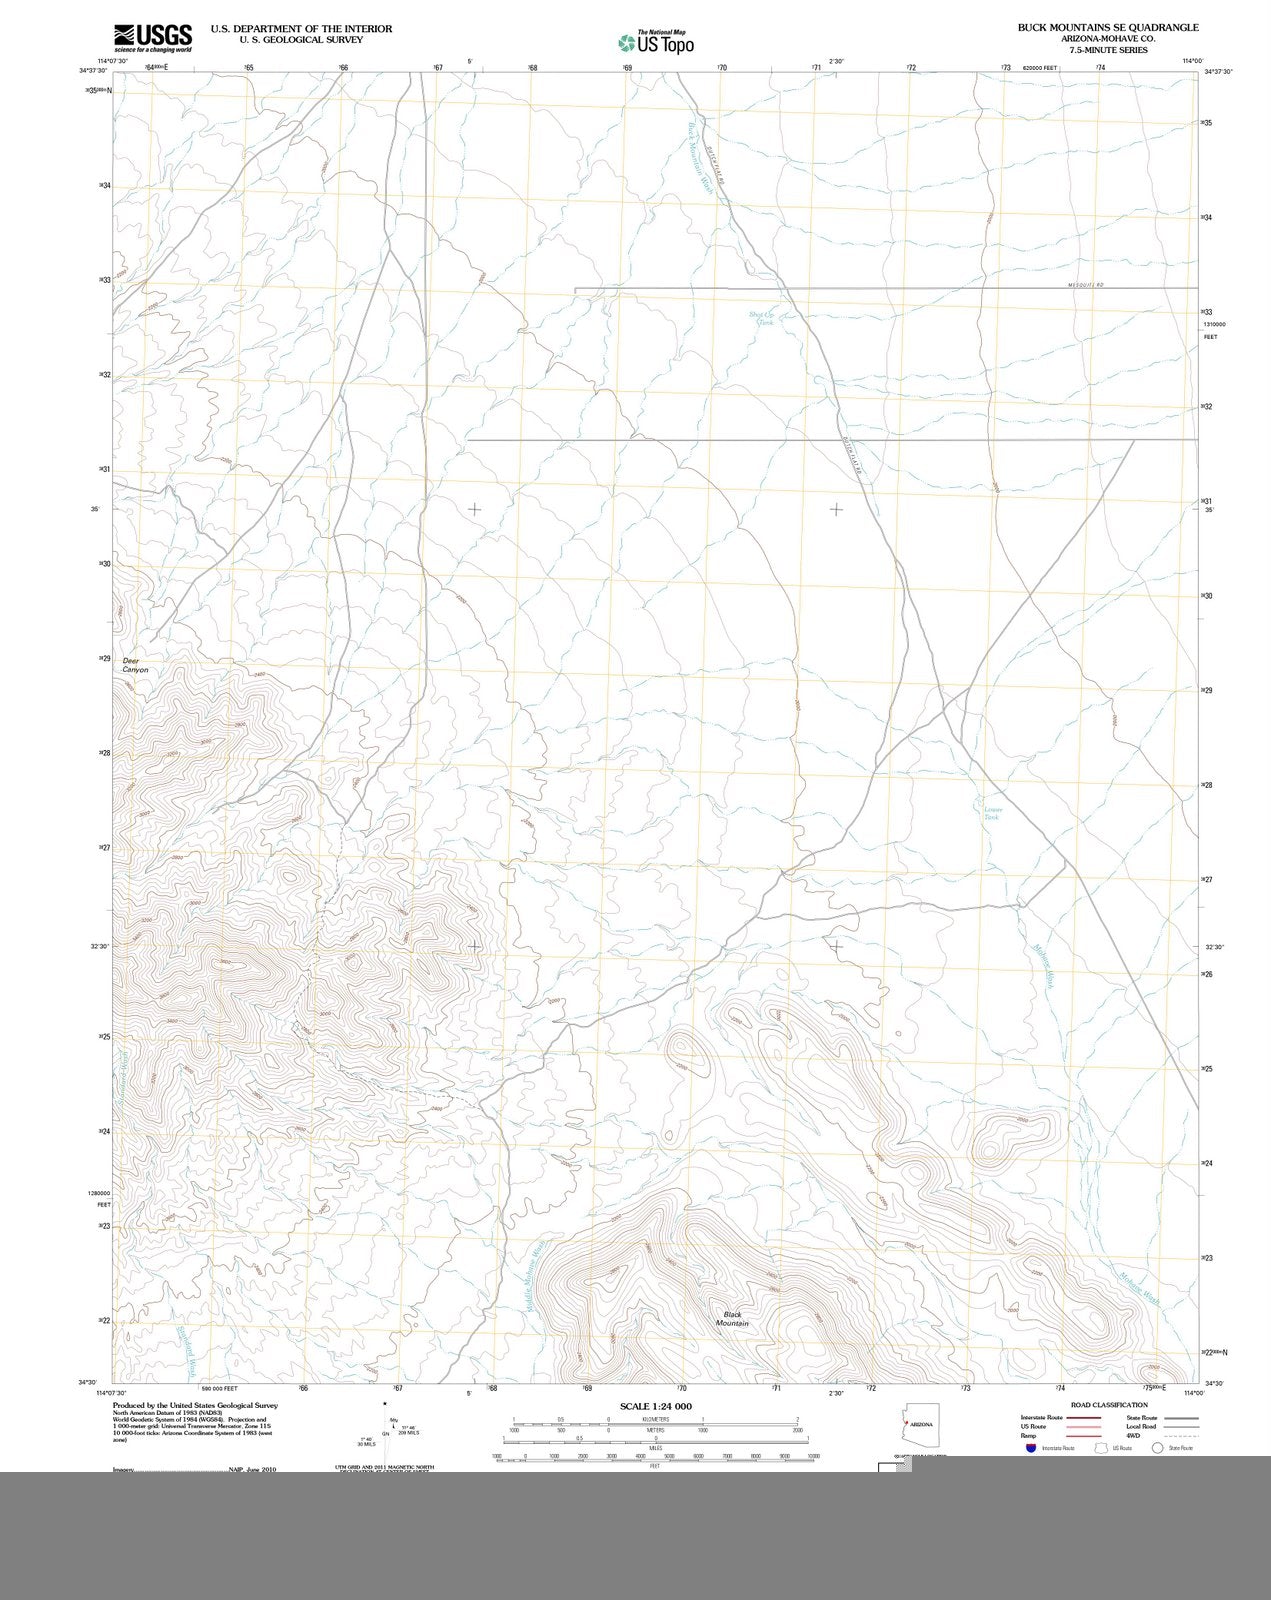 2011 Buck Mountains, AZ - Arizona - USGS Topographic Map v3